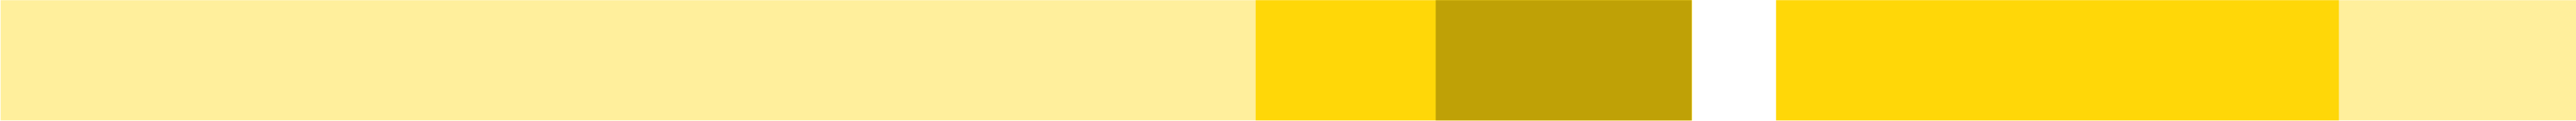 Decorative yellow banner